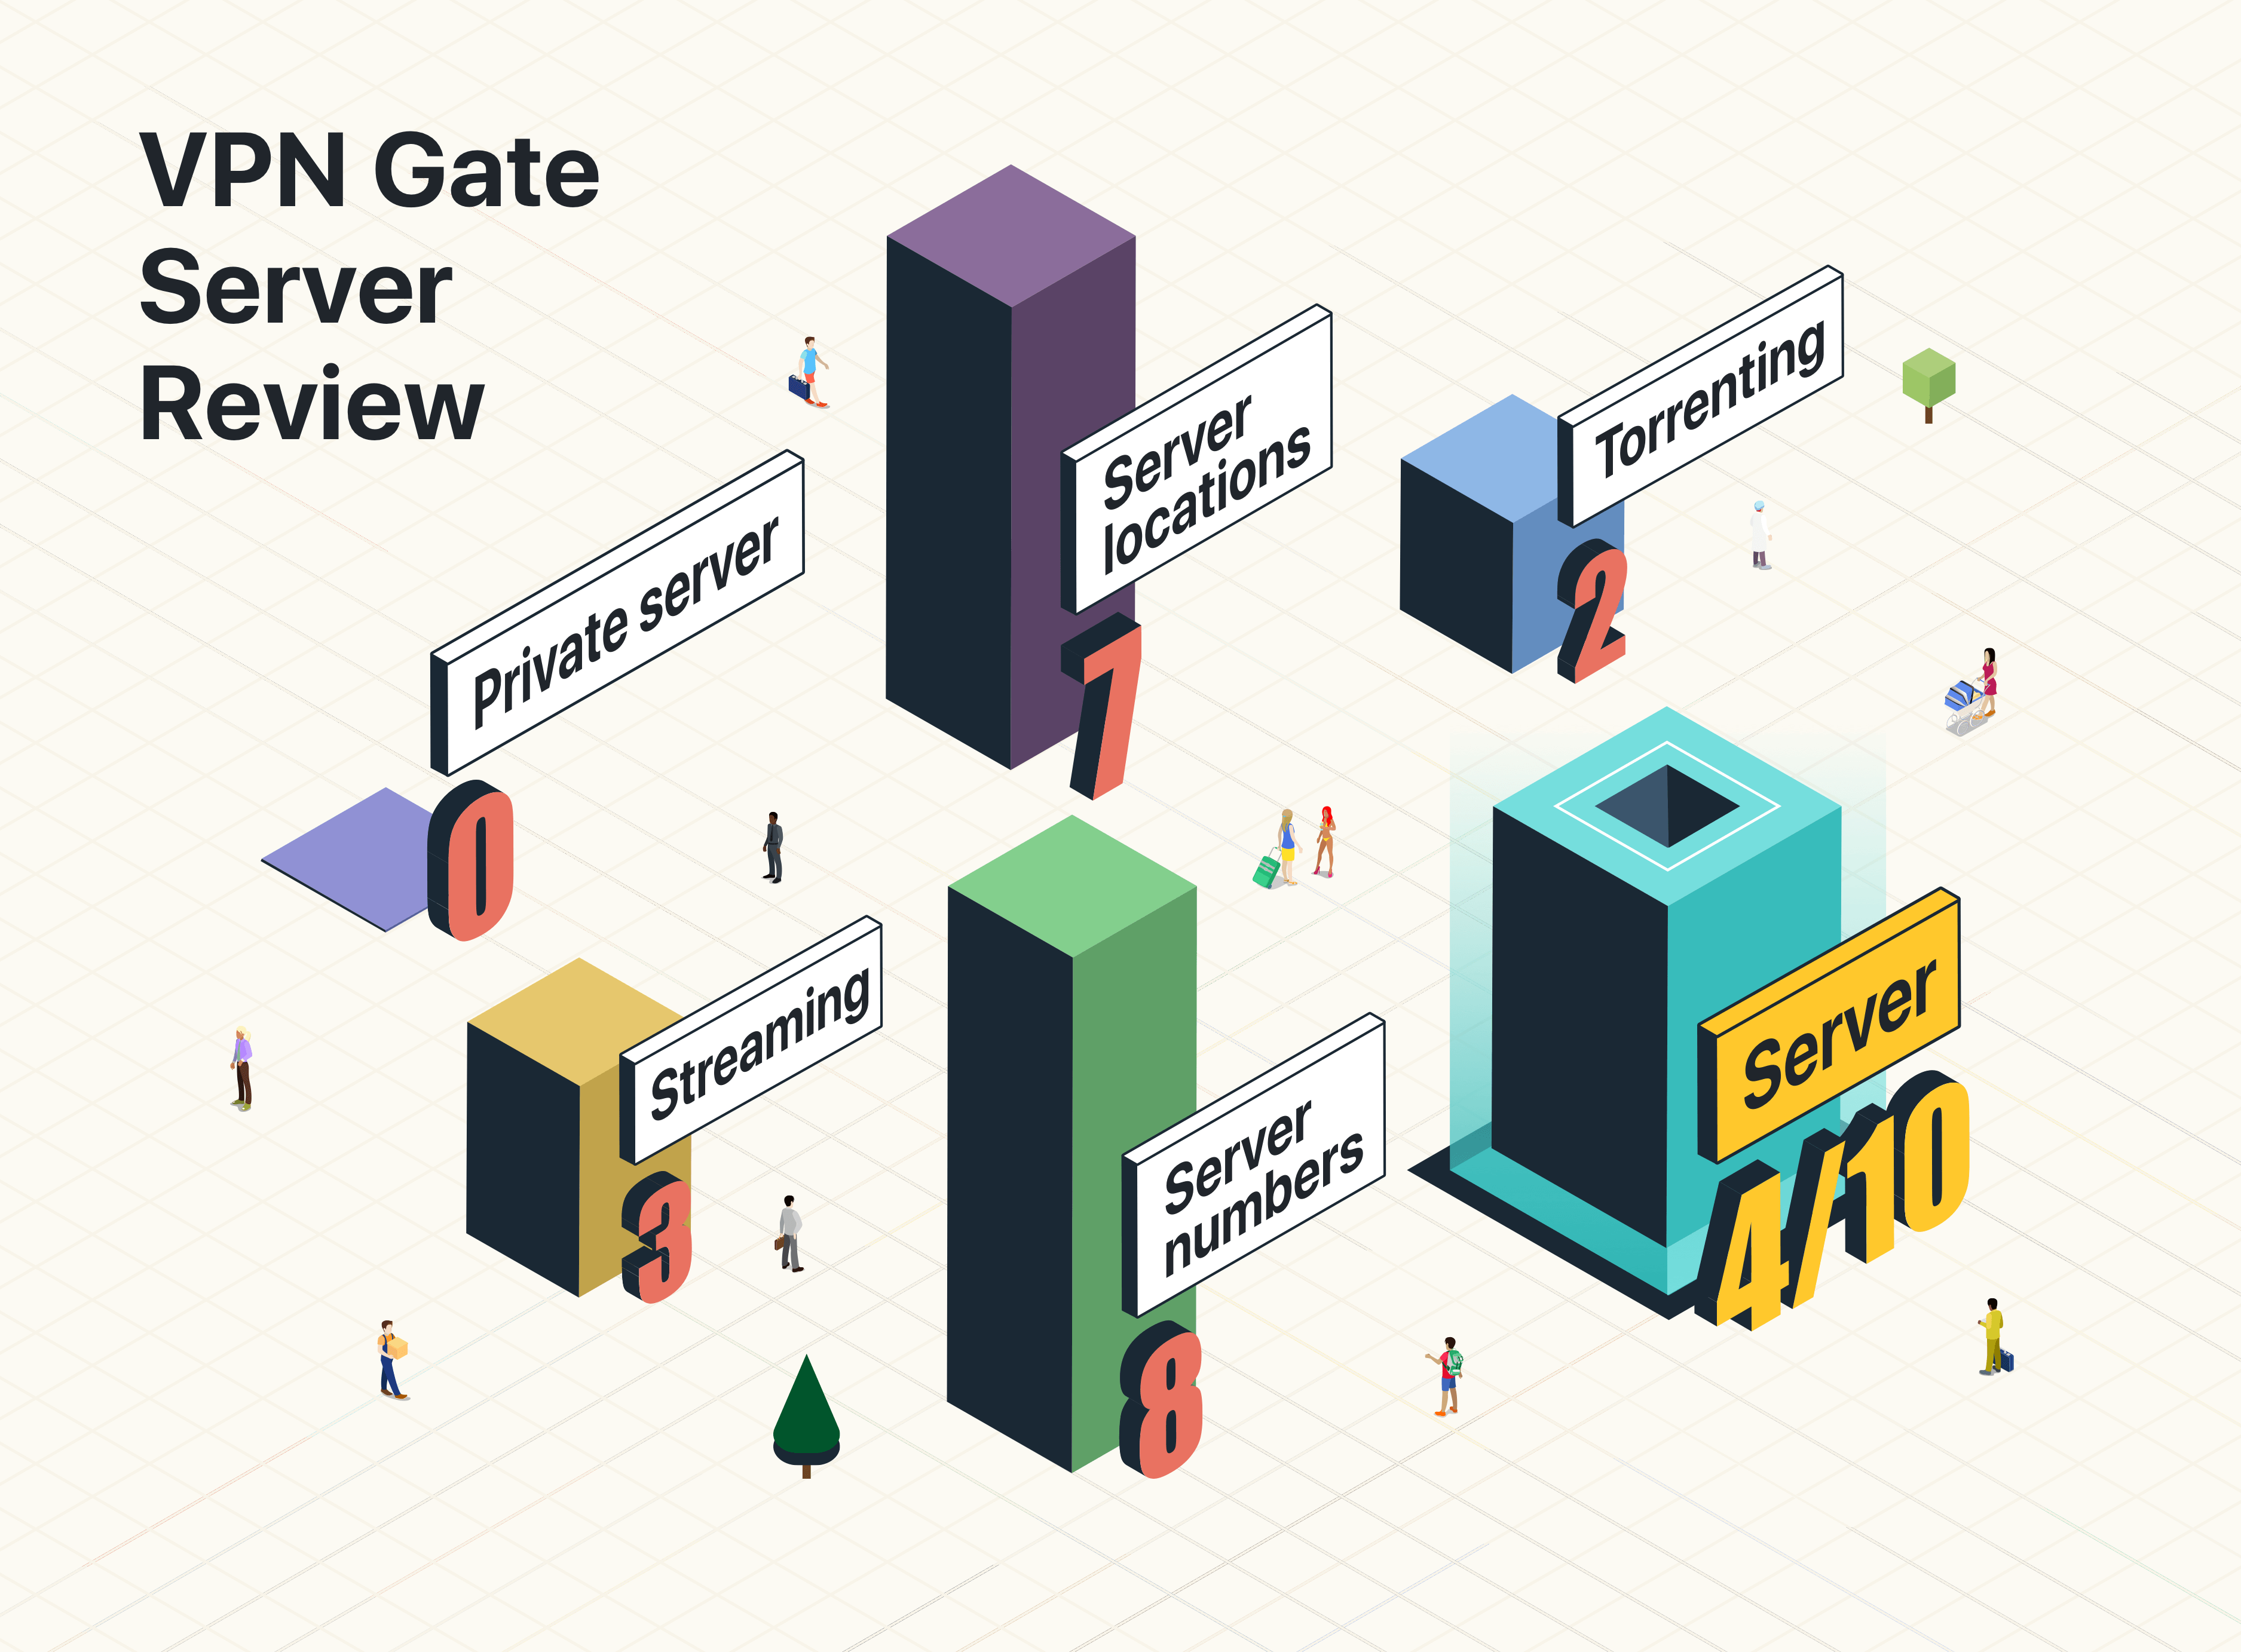 VPN Gate server